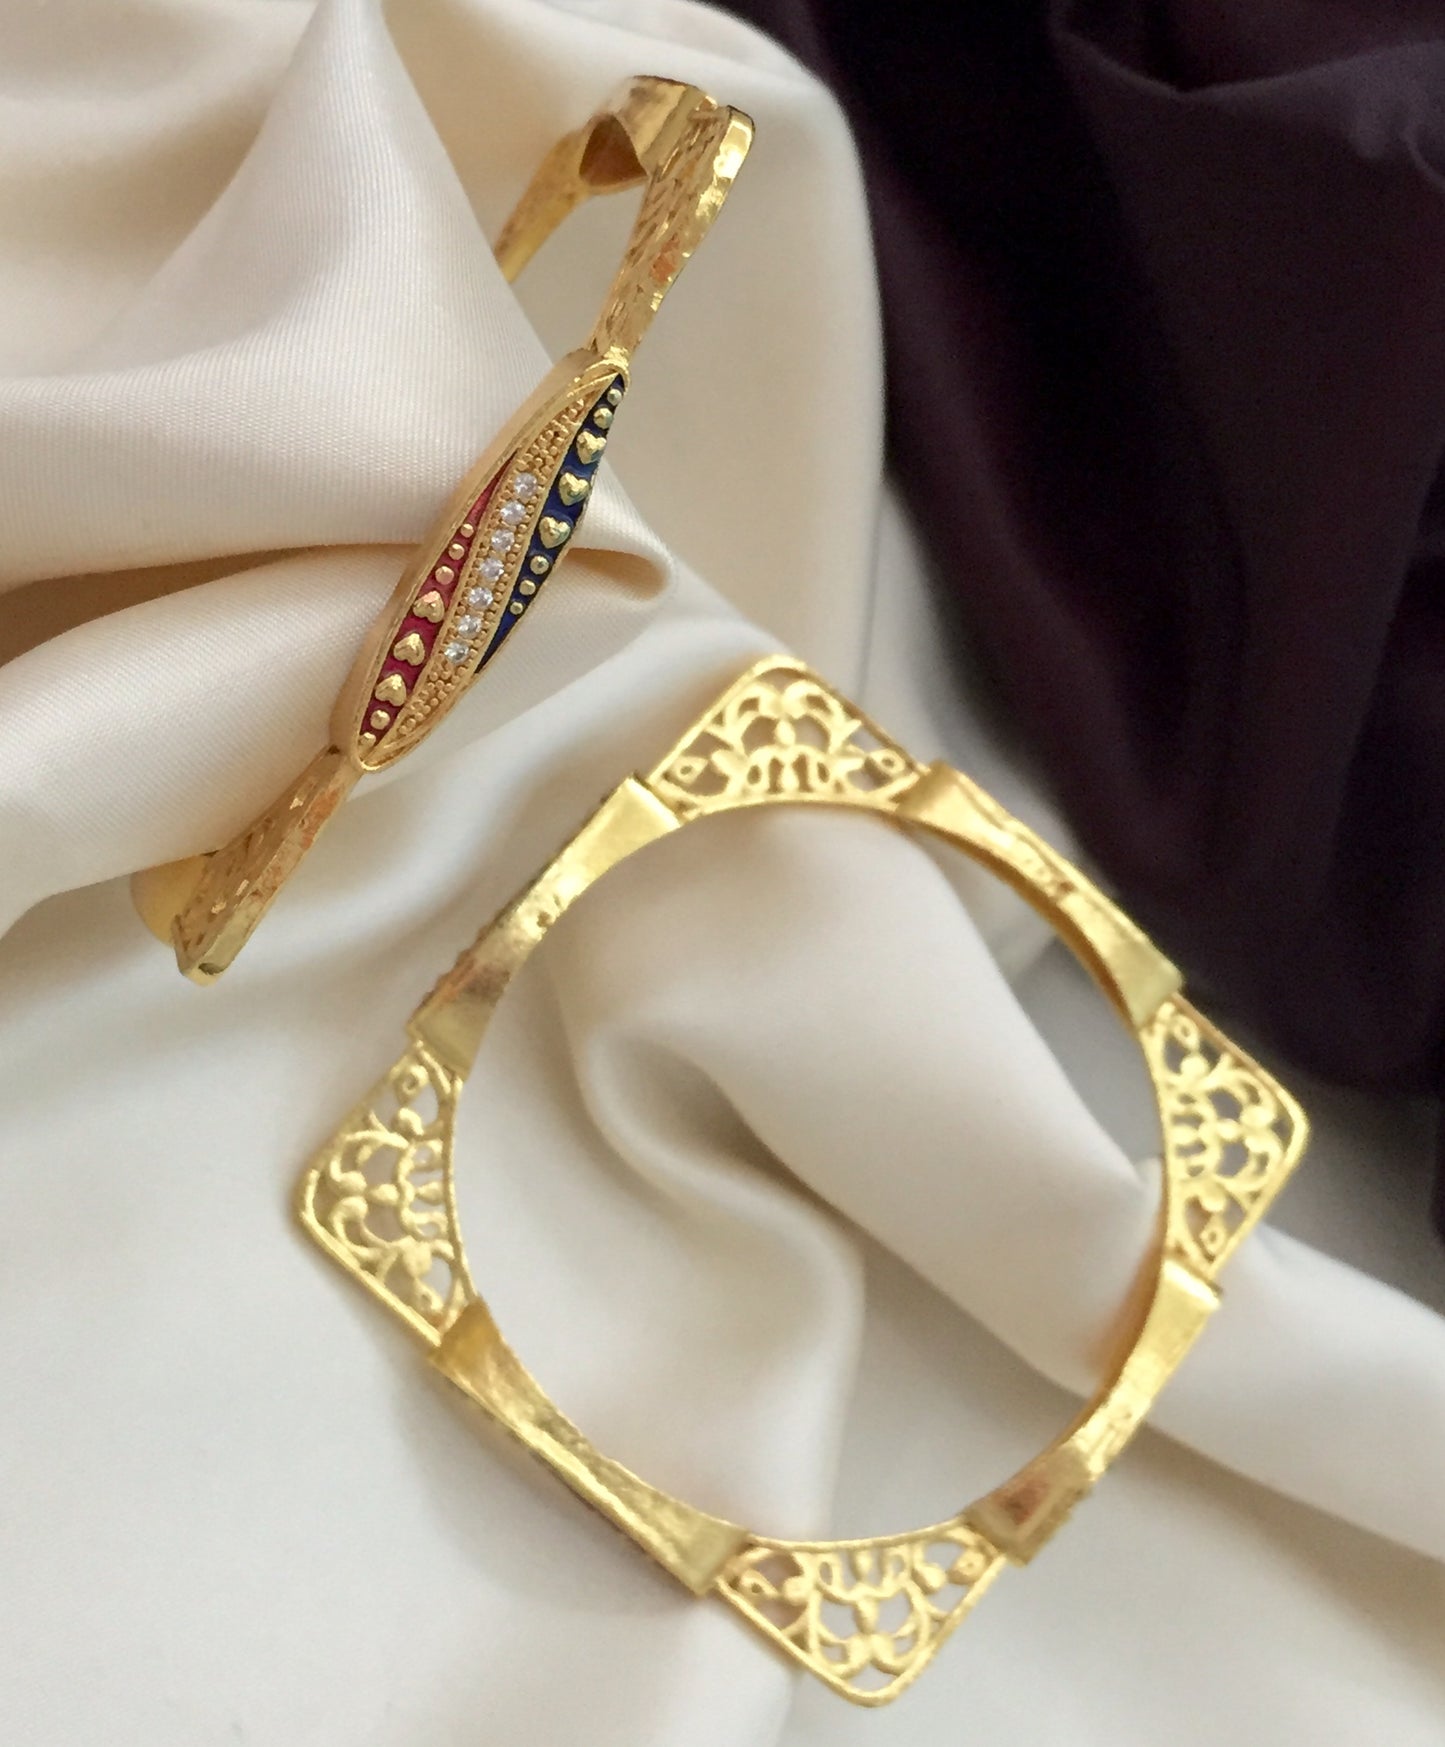 Designer square bangles with enamel